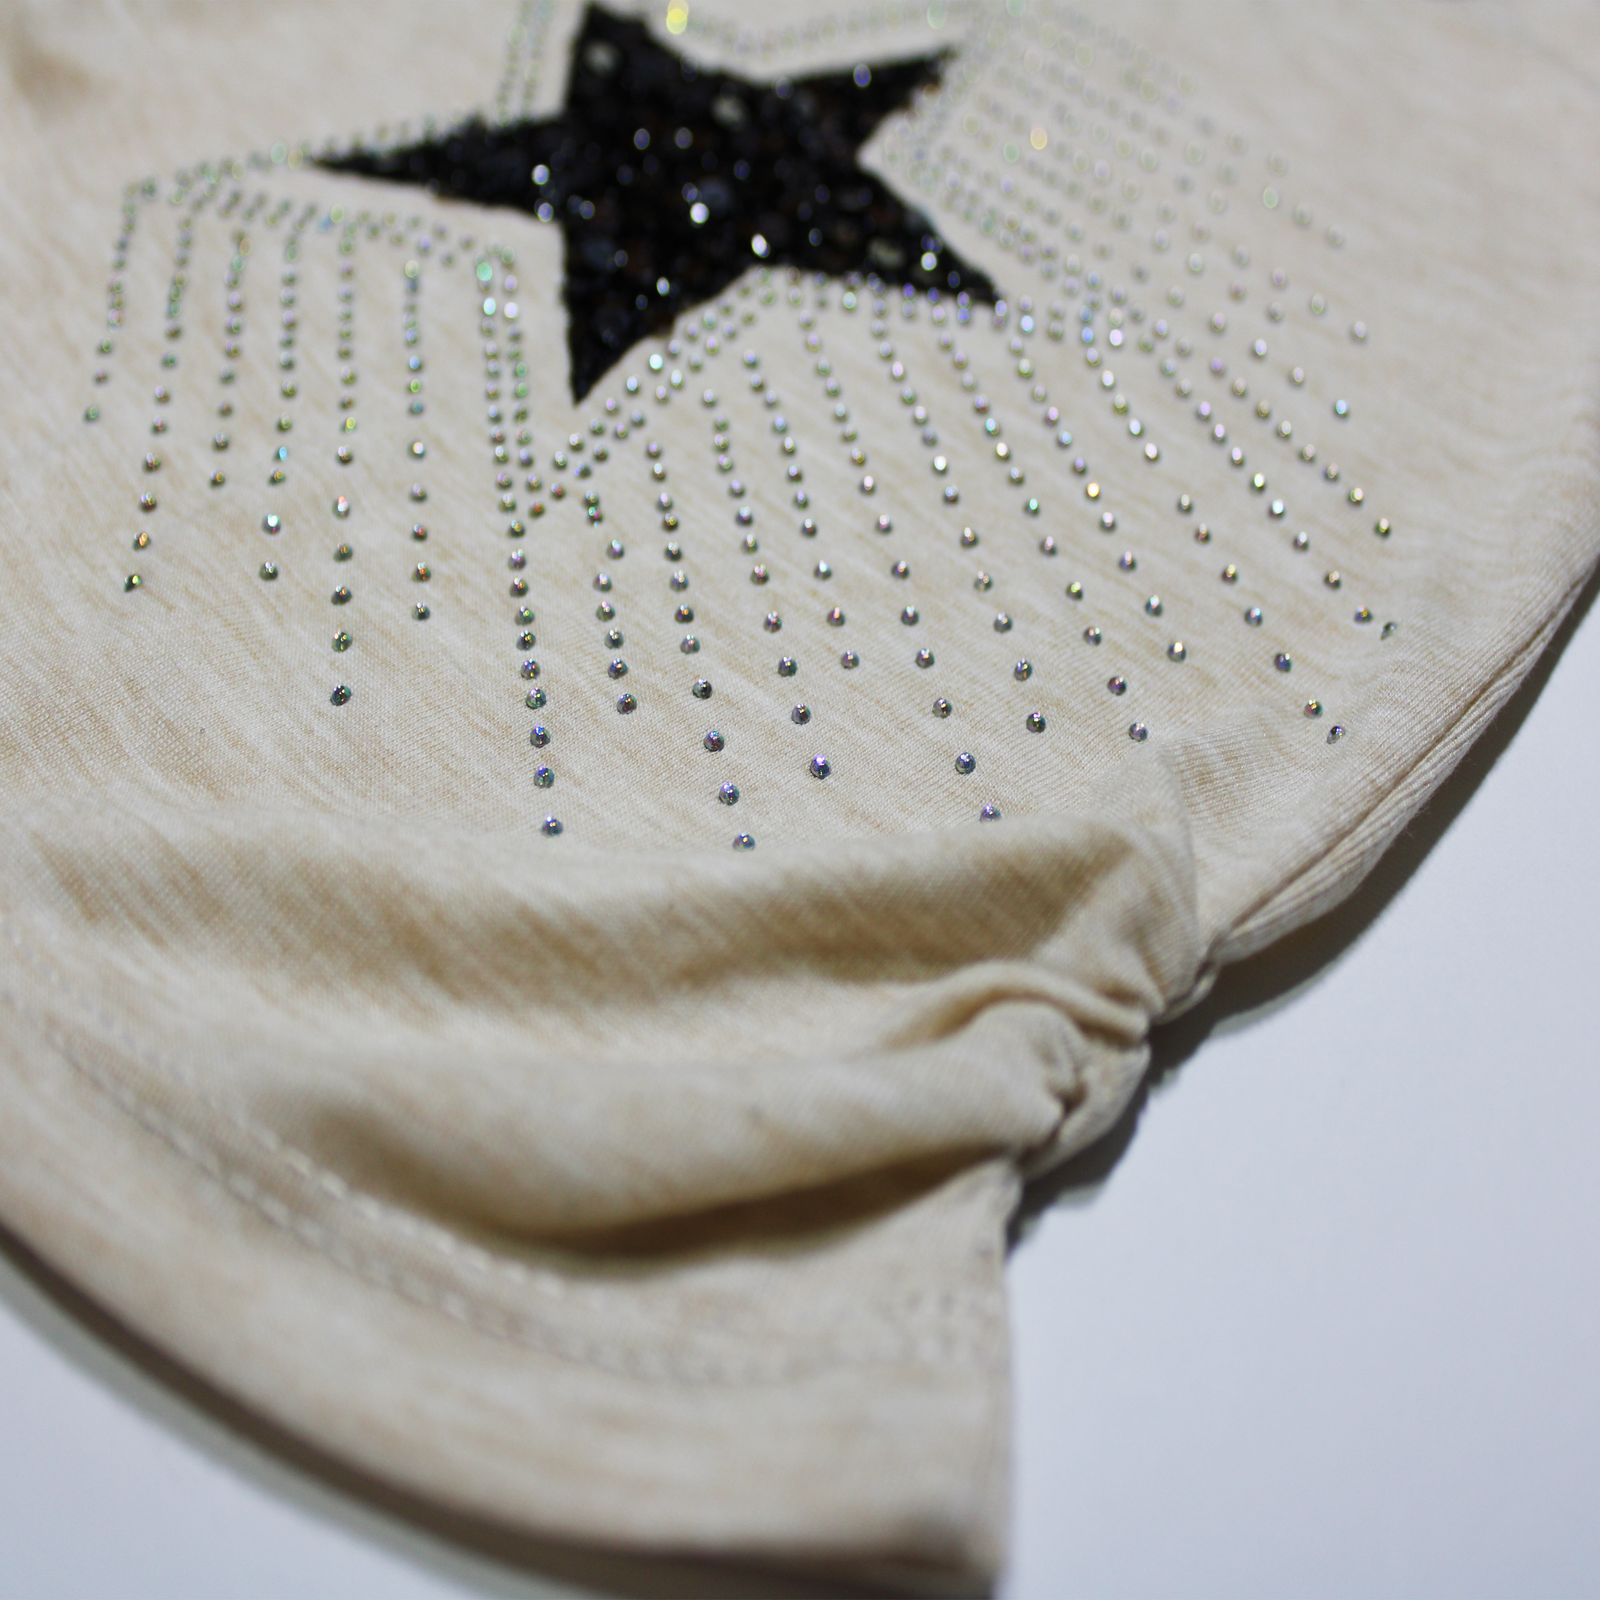 ست تیشرت و شلوارک دخترانه طرح ستاره کد ۱۳۶۱ -  - 5